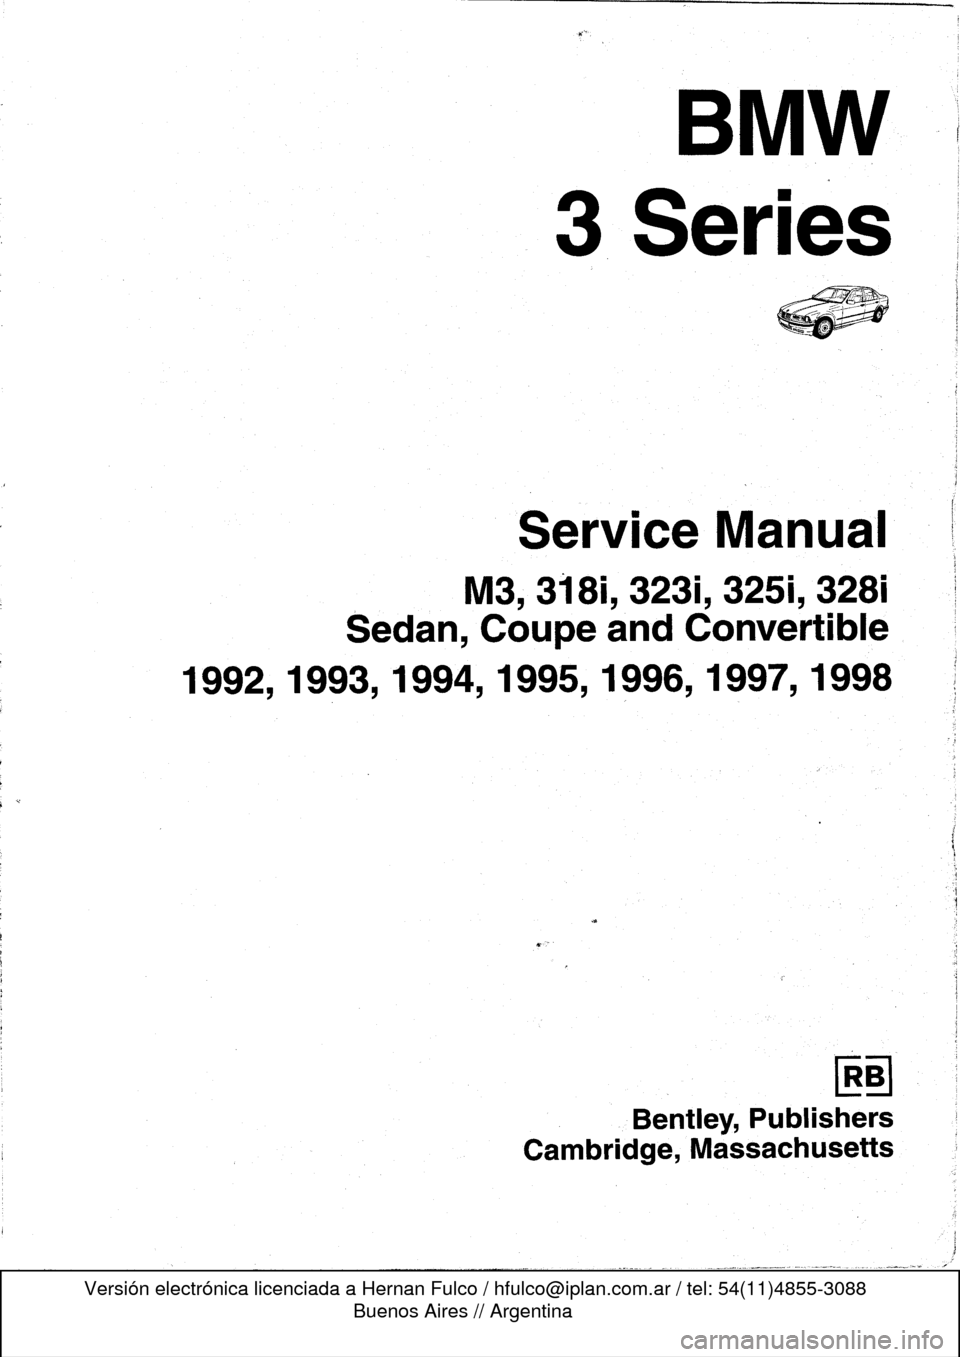 BMW 318i 1998 E36 Workshop Manual 
B
mw

3
Series

M3,
3181,3231,3251,
3281

Sedan,
Coupe
and
Convertible

1992,1993,1994,1995,
1996,1997,
1998

Bentley,
Publishers

Cambridge,
Massachusetts 